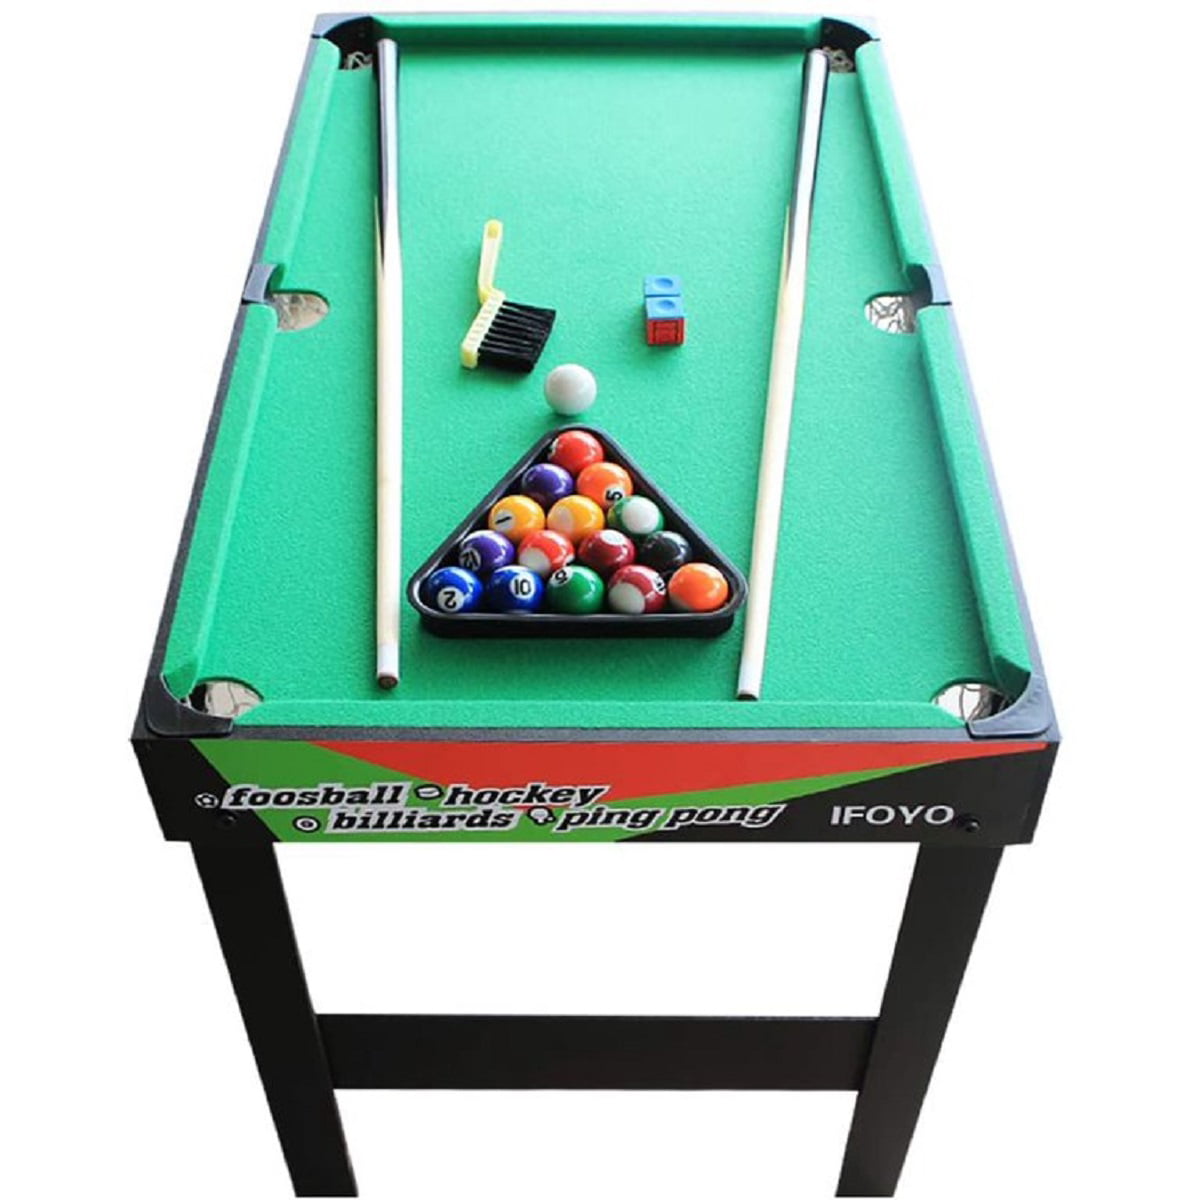 Serenelife 4 in 1 Multi-Function Game Table-Steady Pool, Hockey, Soccer  Foosball